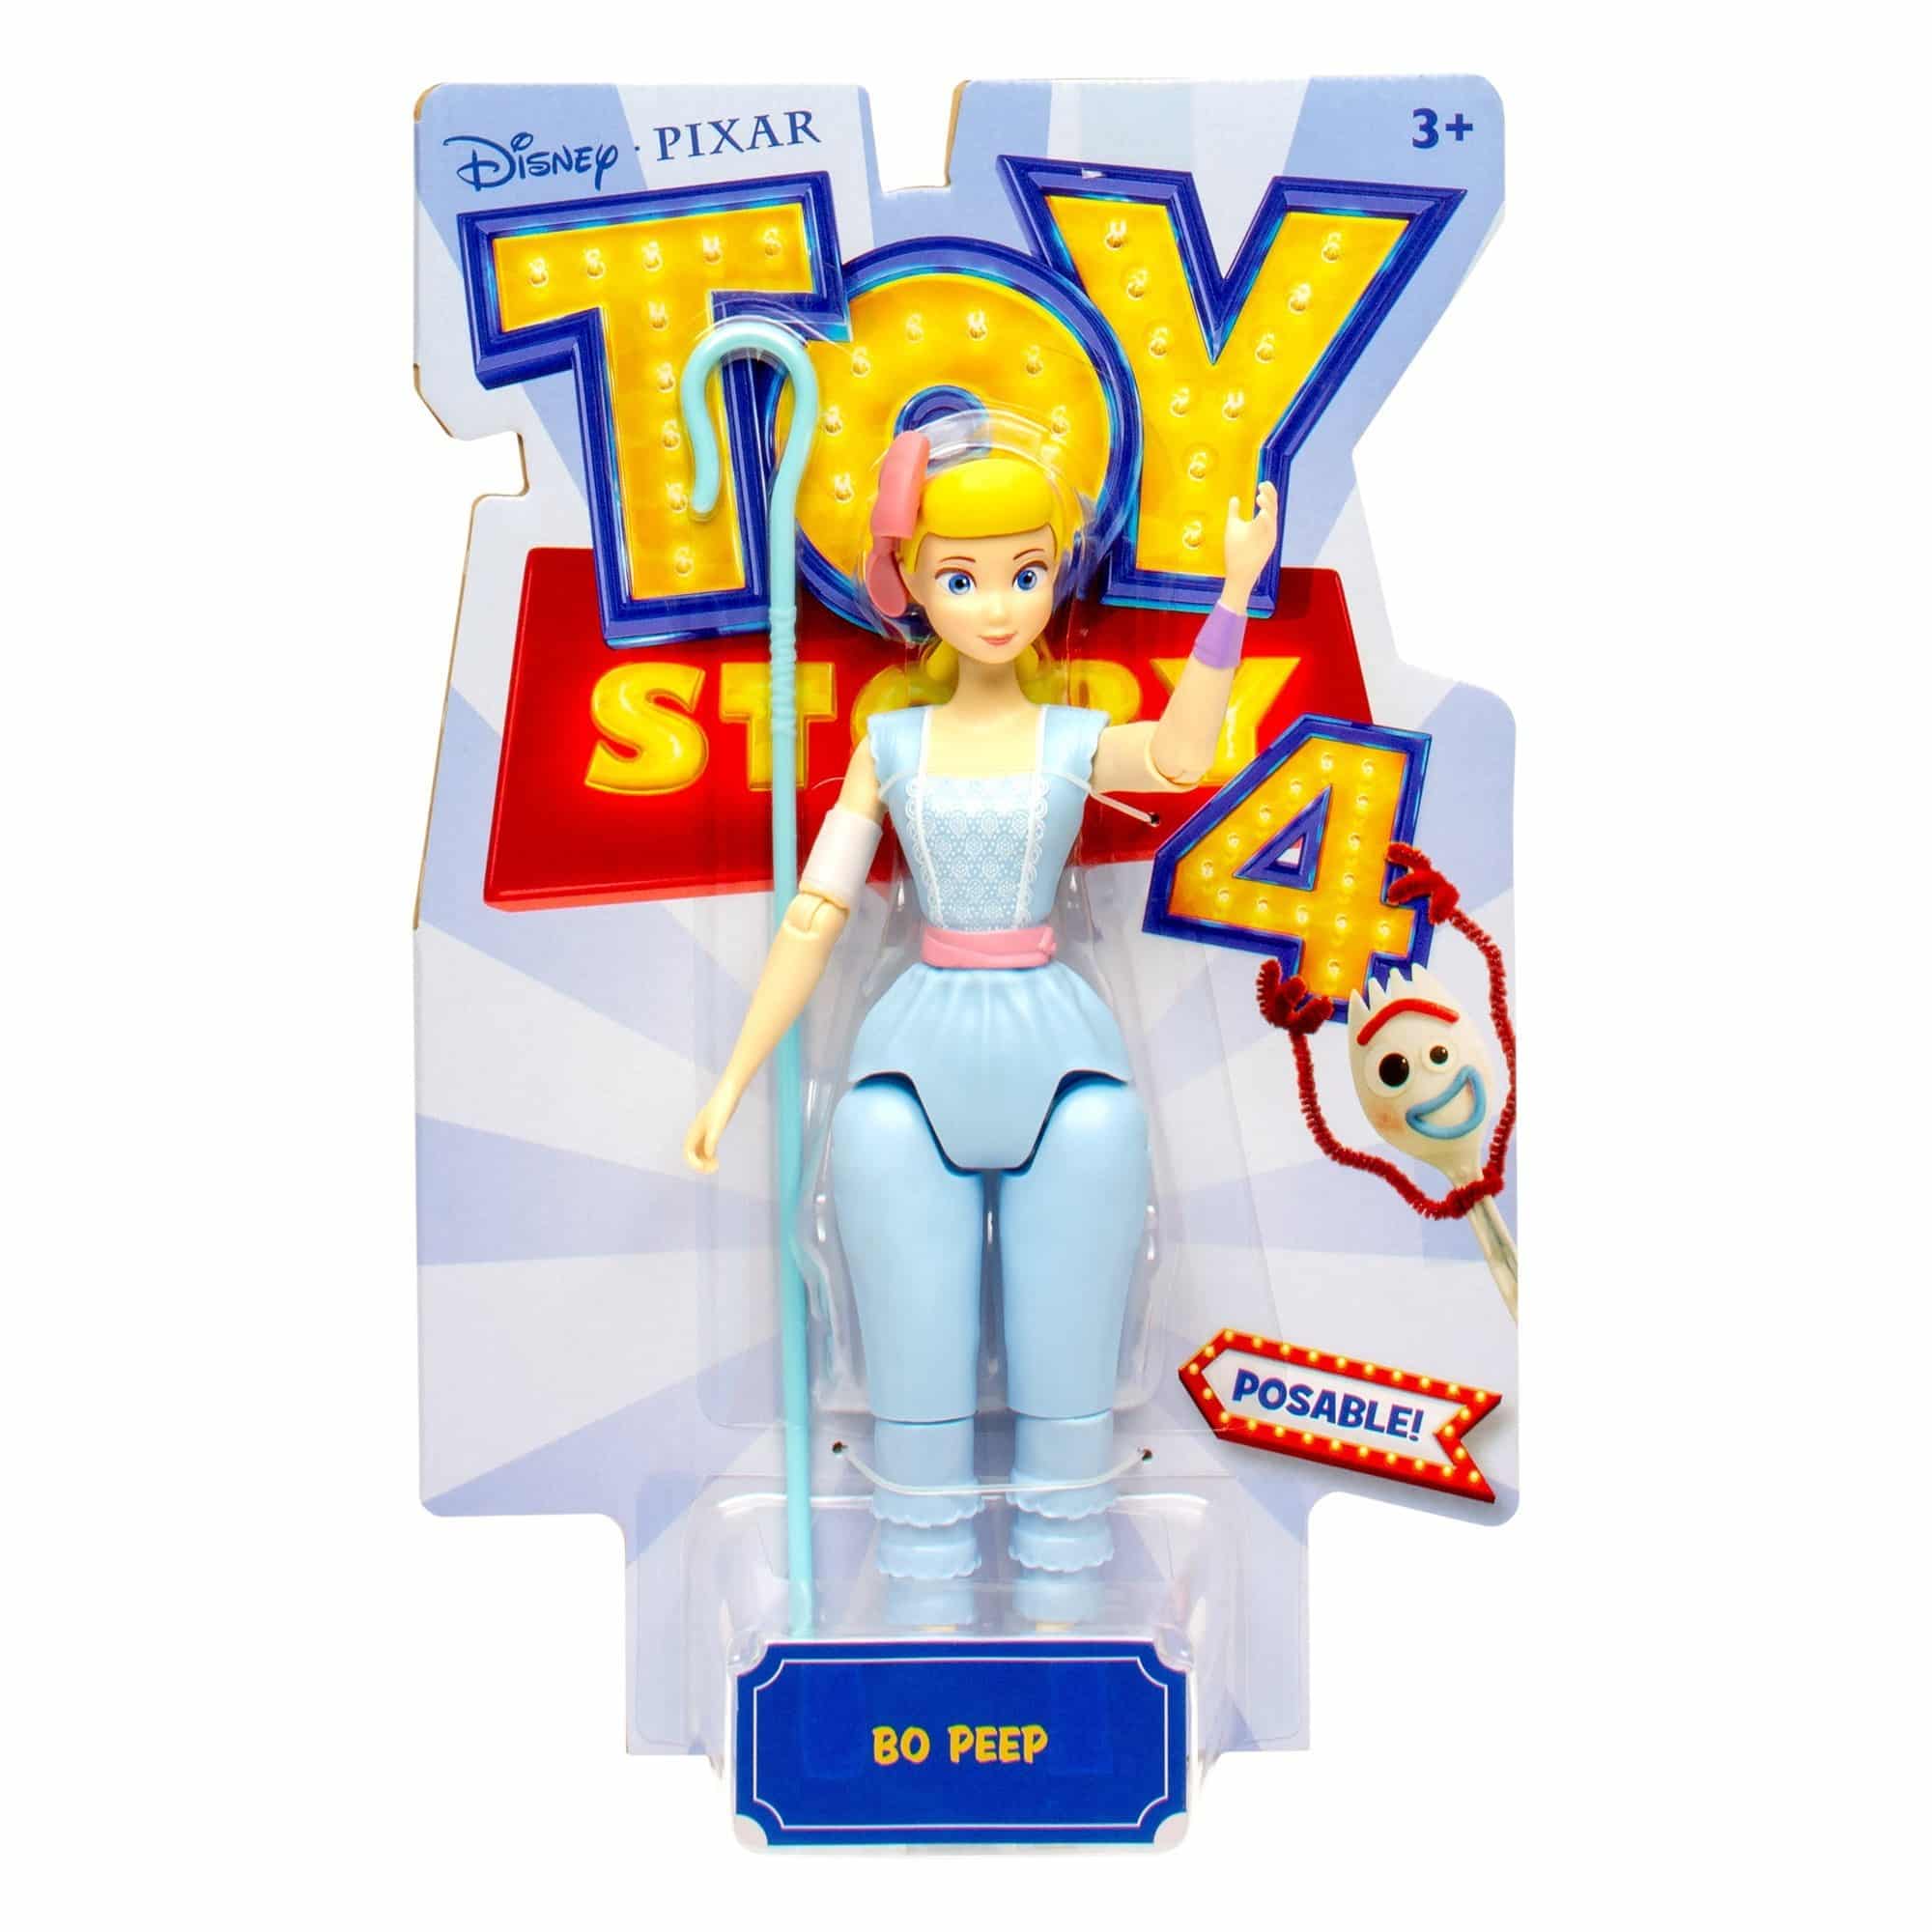 Toy Story 4 - 7" Figure Assortment - Bo Peep